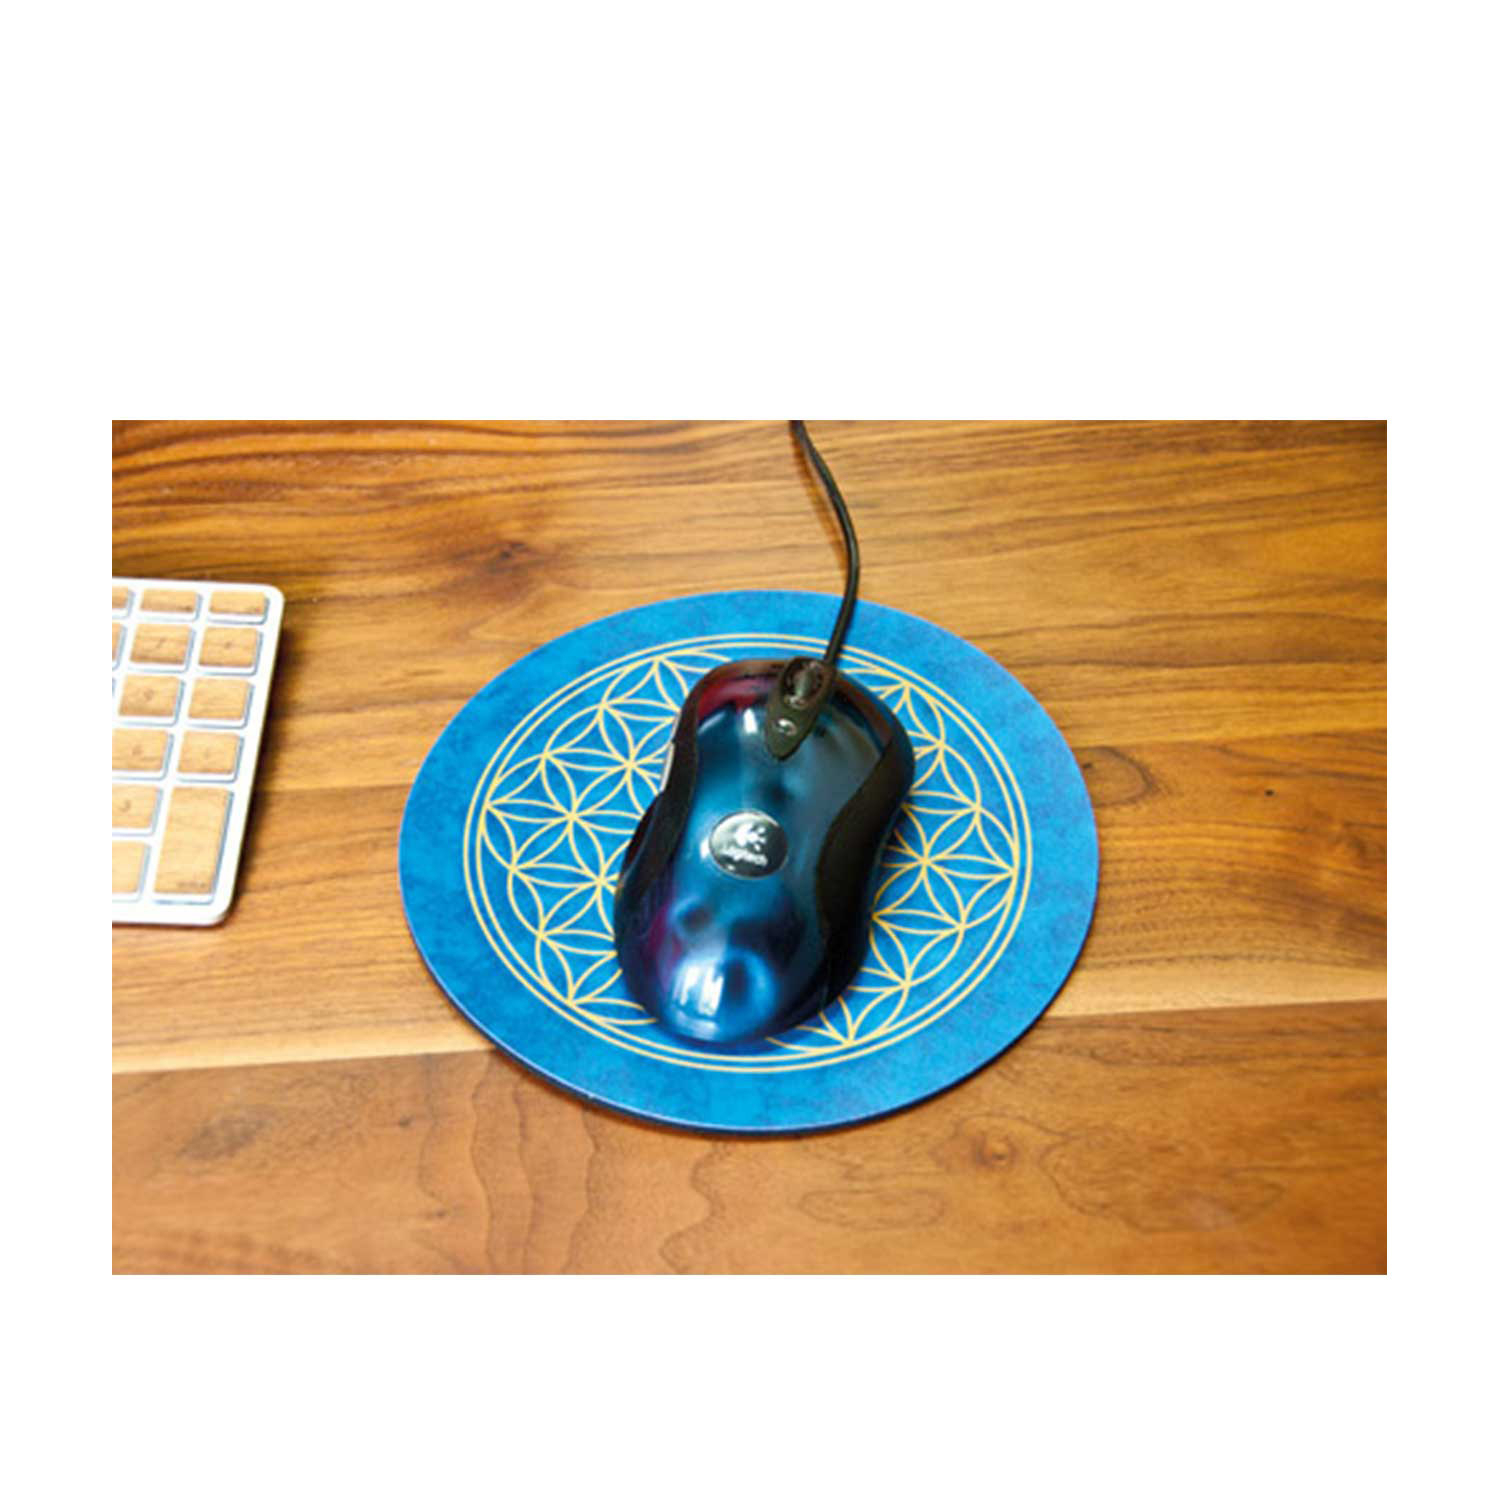 Mousepad „Blume des Lebens“, Produktbild 1